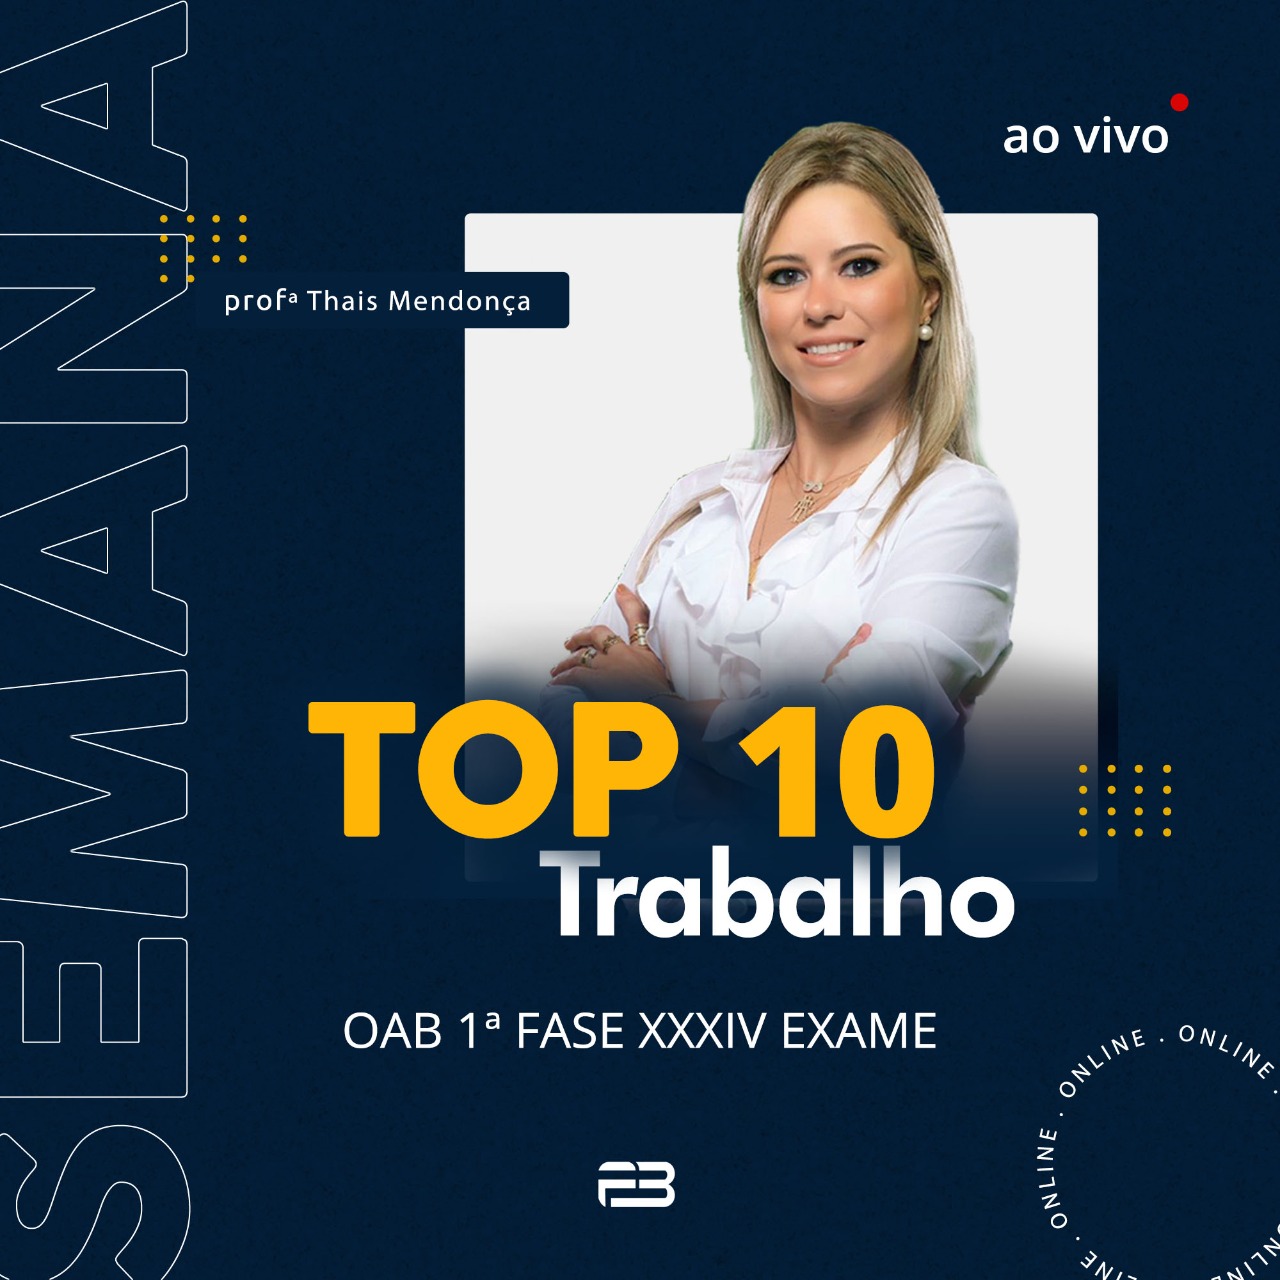 TOP 10 TRABALHO - OAB 1º FASE XXXIV EXAME 